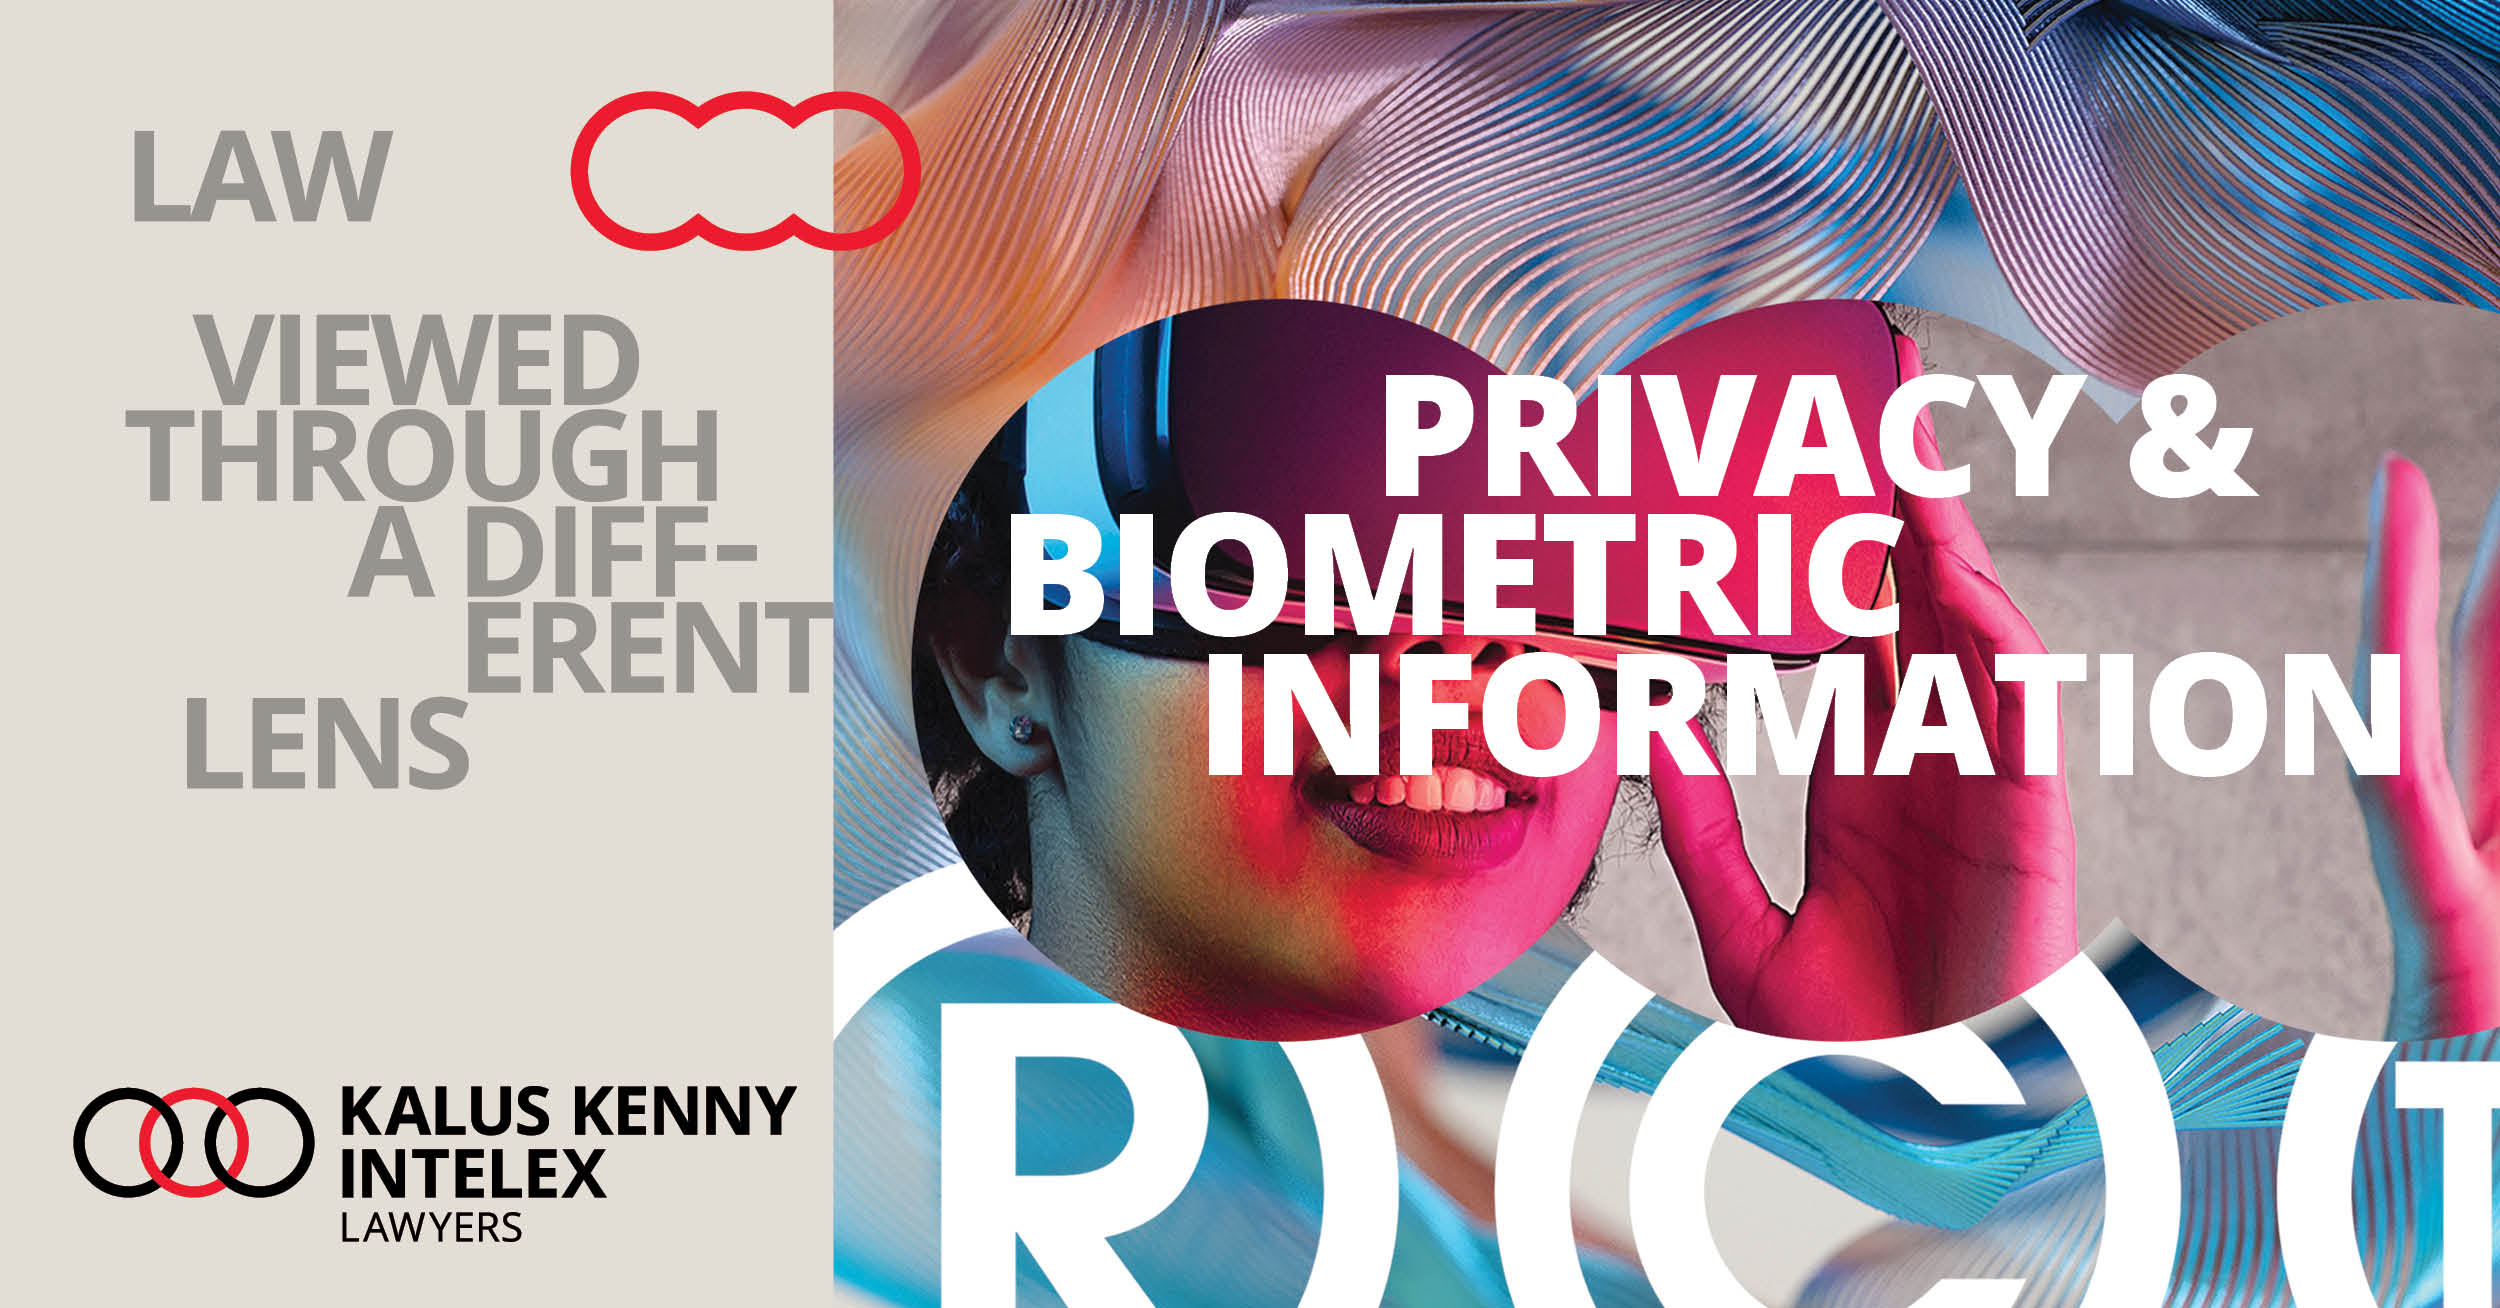 Privacy and biometric information. 7-Eleven breaches customer’s privacy